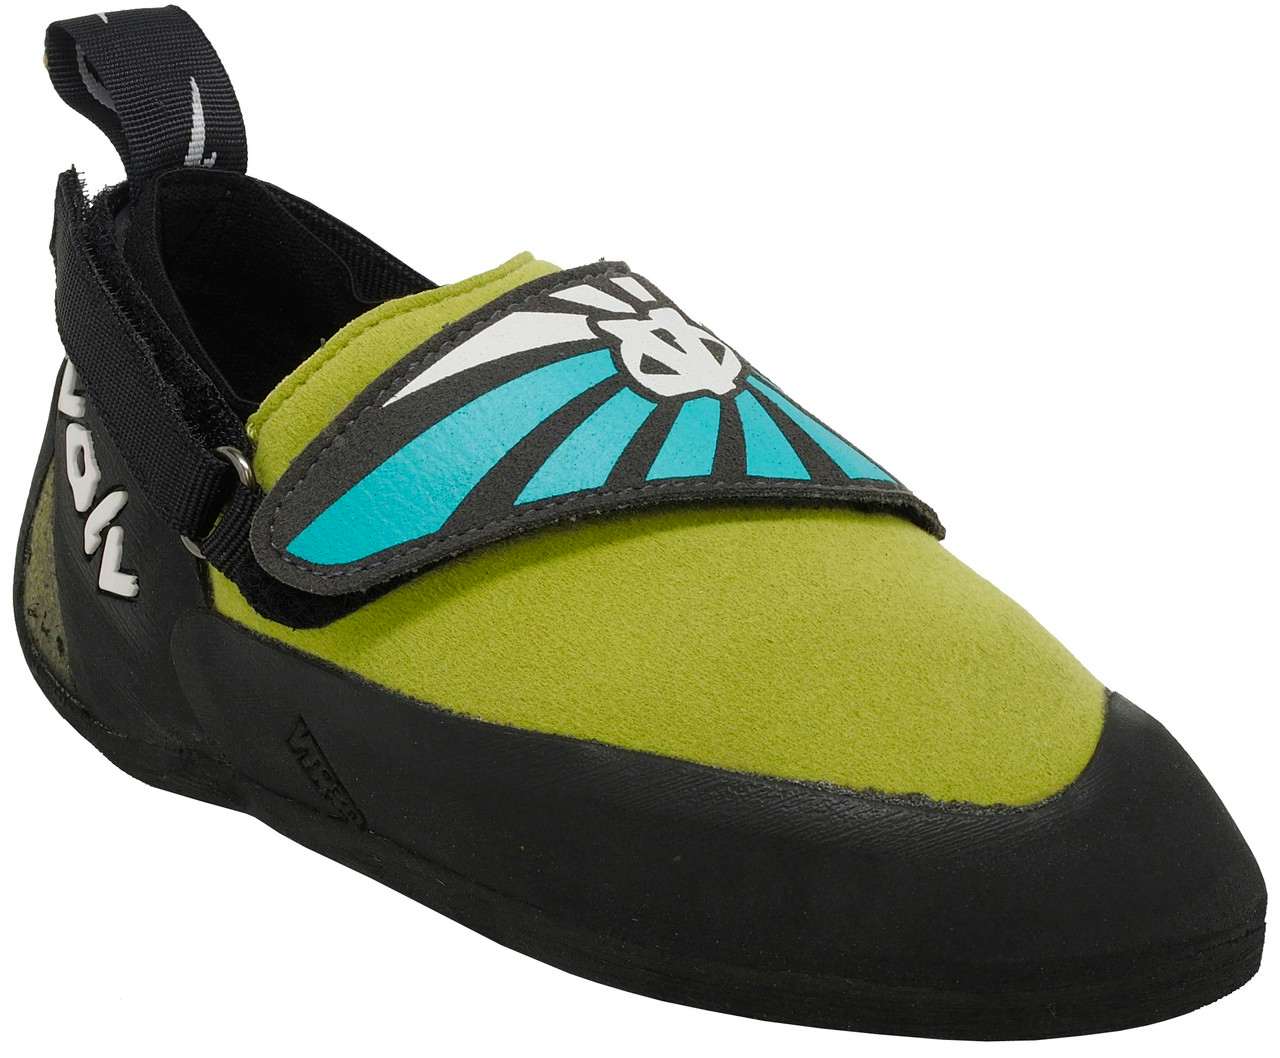 Venga Rock Shoes Lime Green